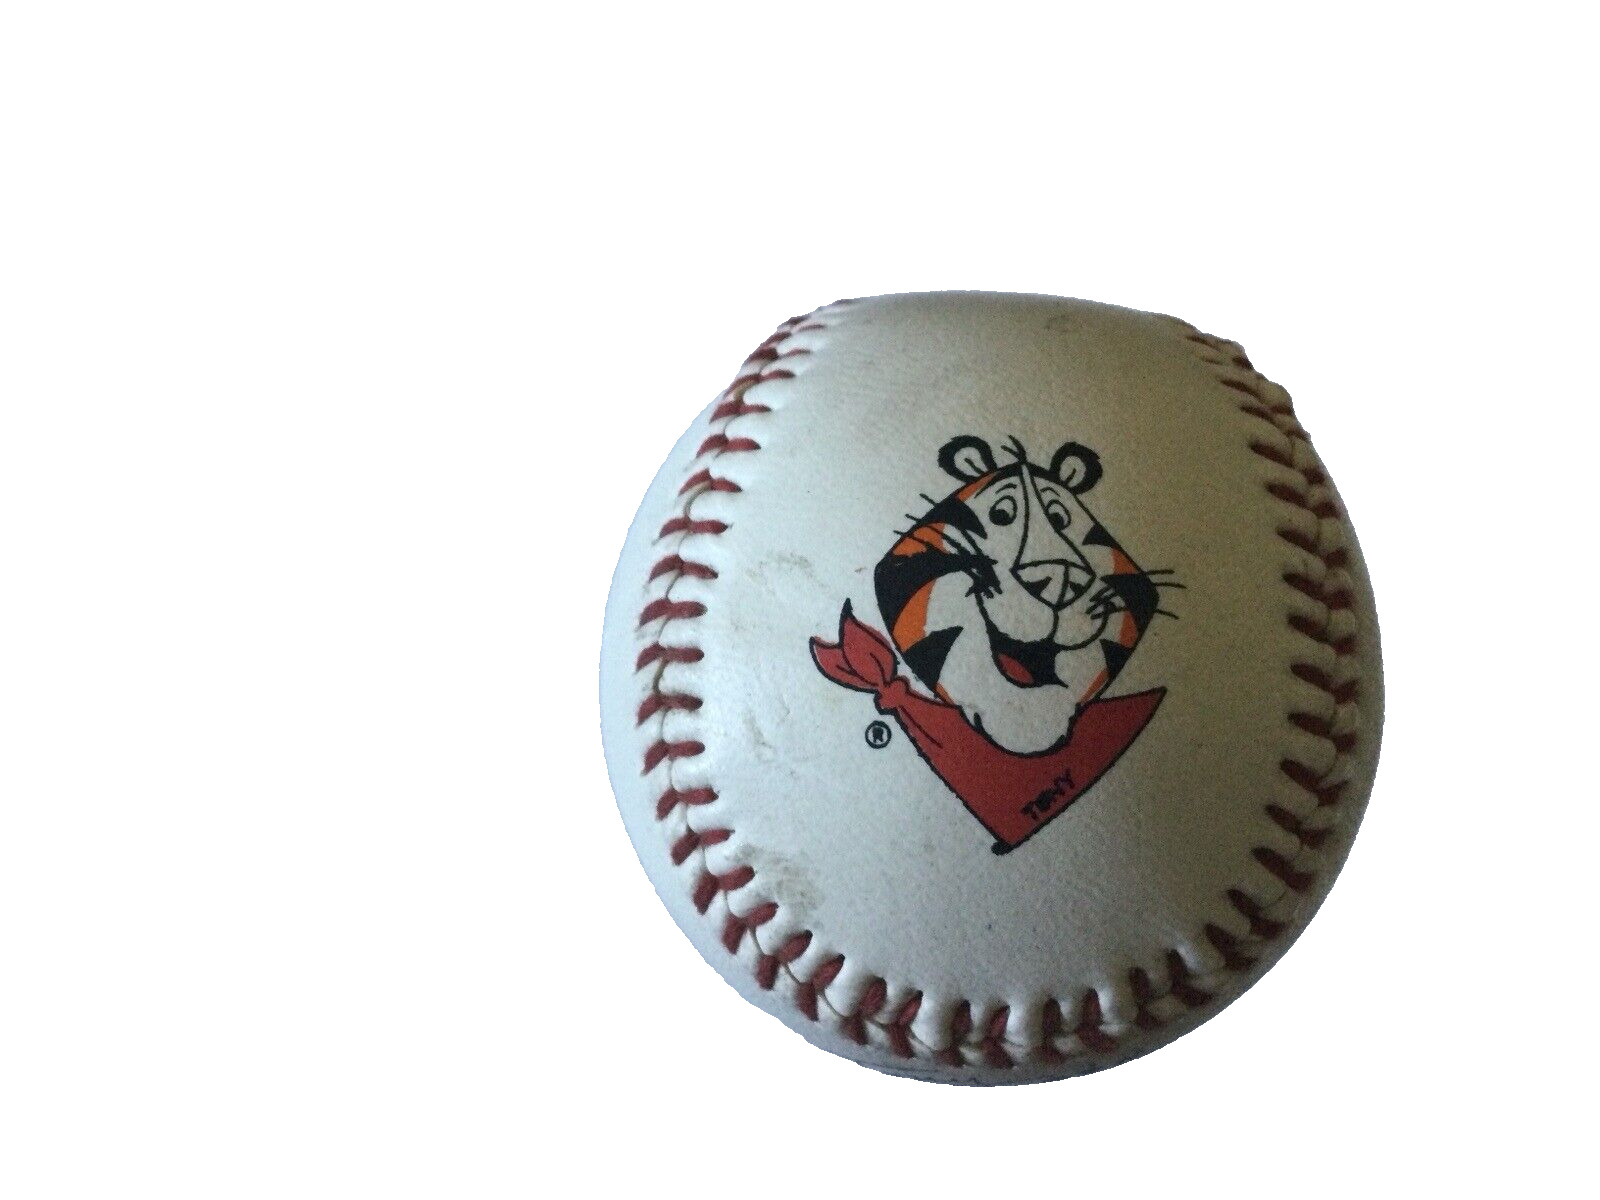 Kellogs Tony the Tiger signed baseball- promotional